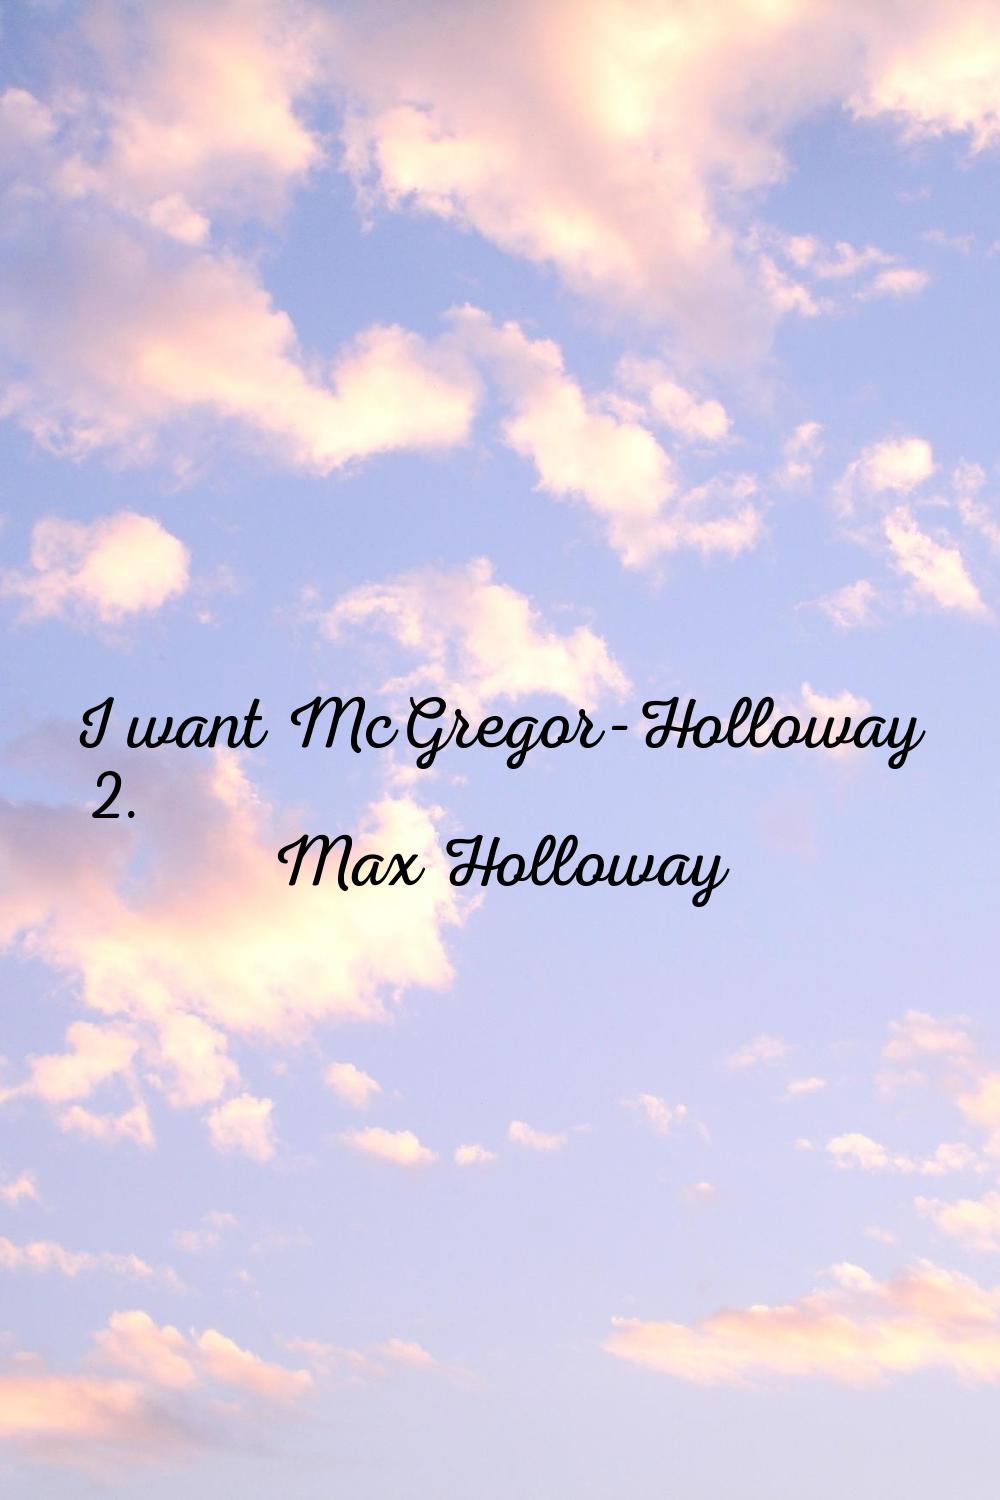 I want McGregor-Holloway 2.